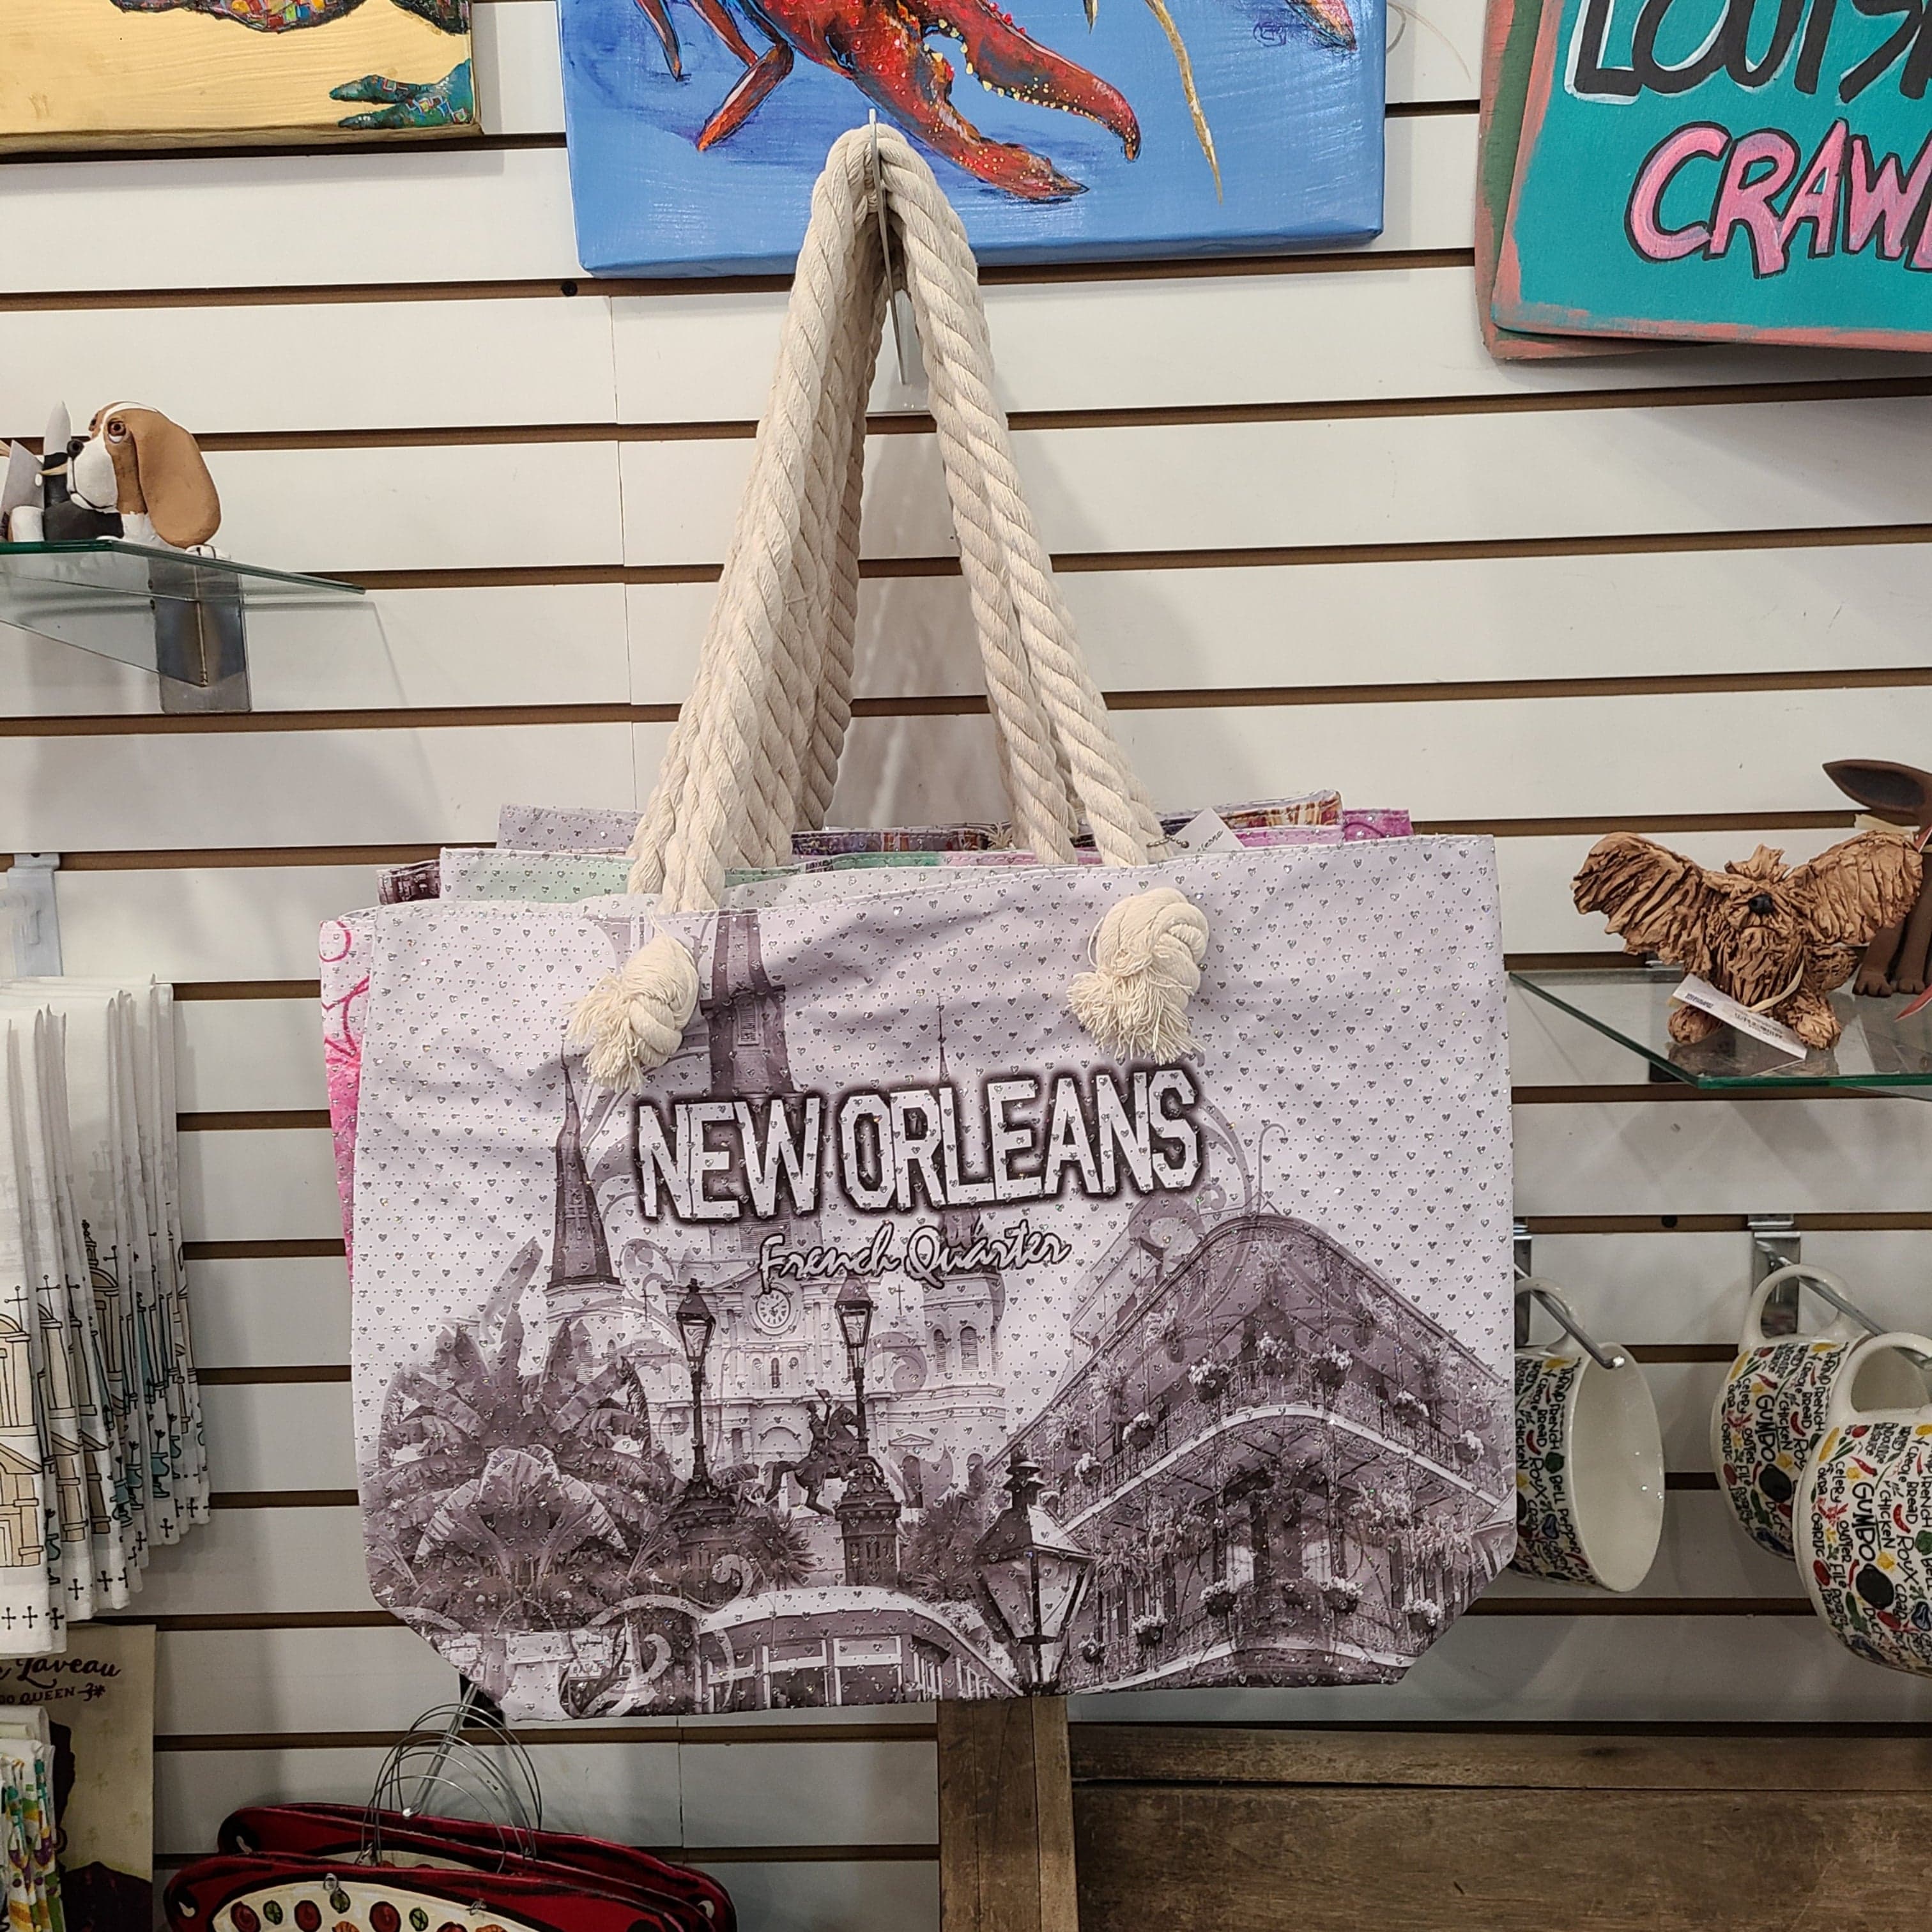 P&A Gift New Orleans Shopping Bag - Little Miss Muffin Children & Home